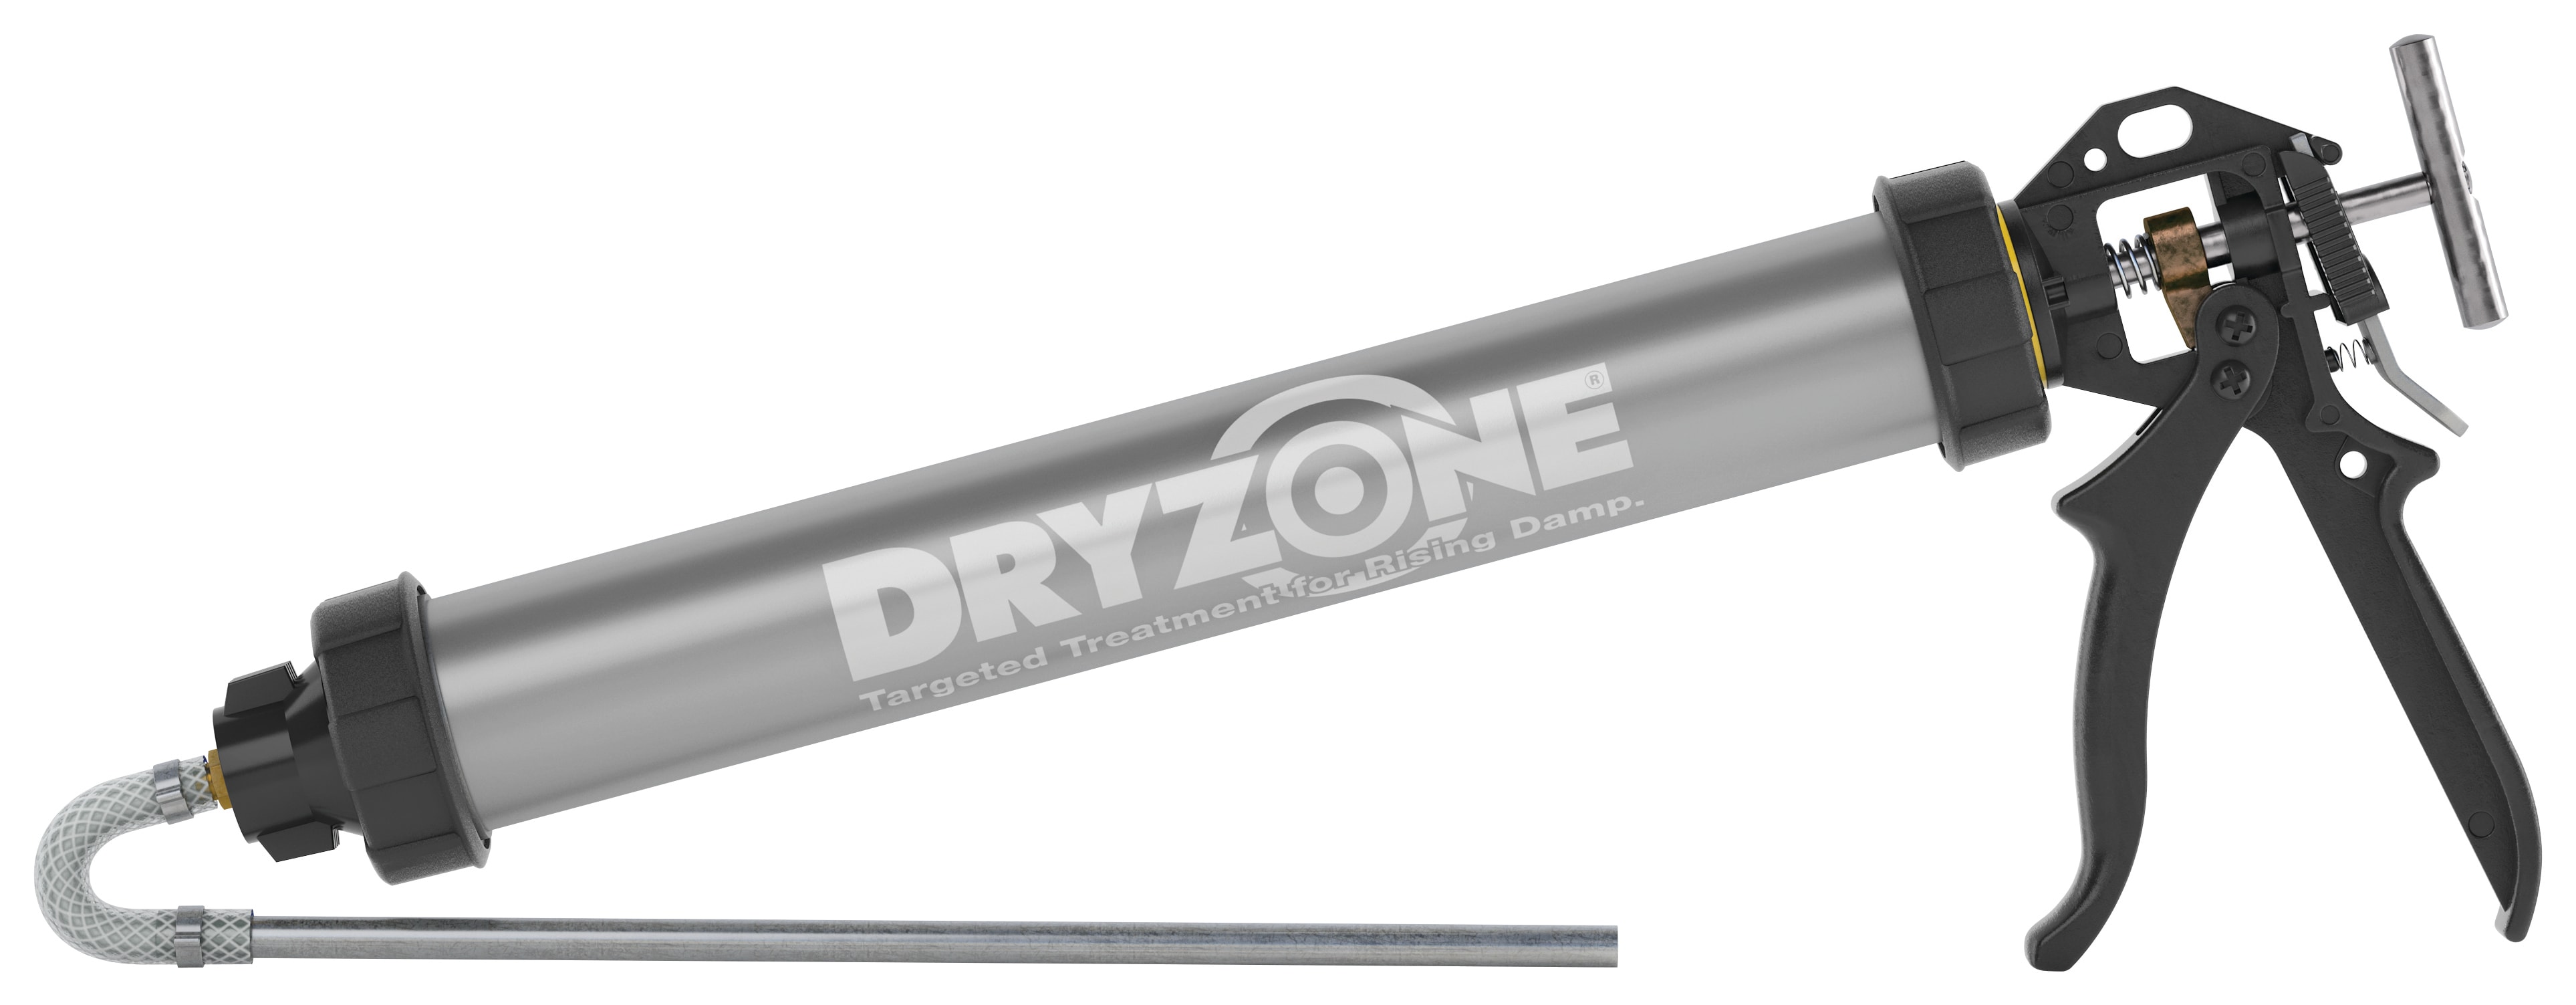 Dryzone DPC Cream Foil Applicator Gun